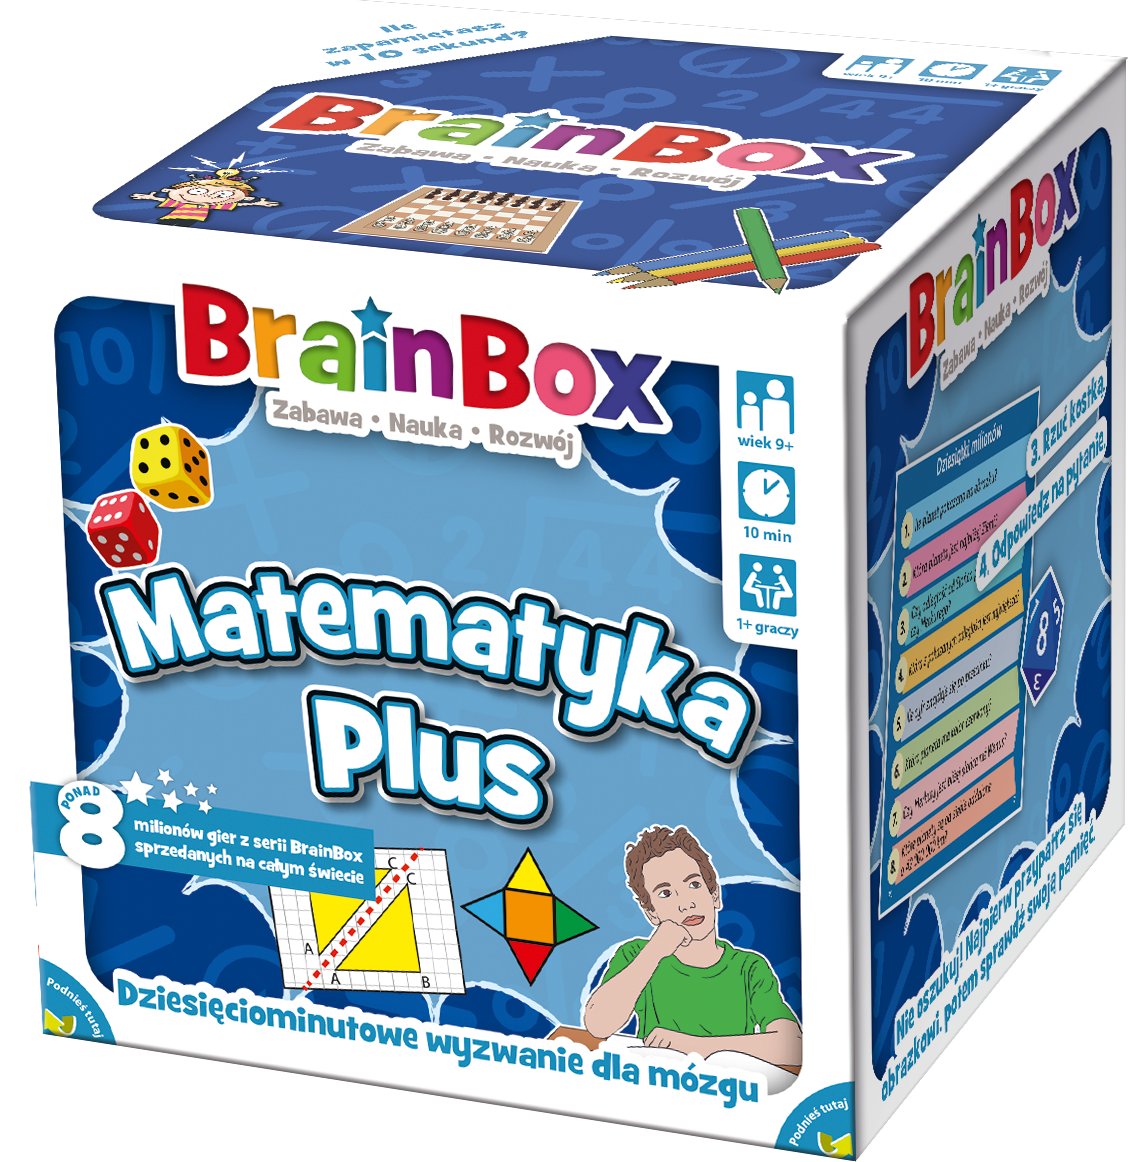 BrainBox - Matematyka Plus (druga edycja) gra edukacyjna Rebel